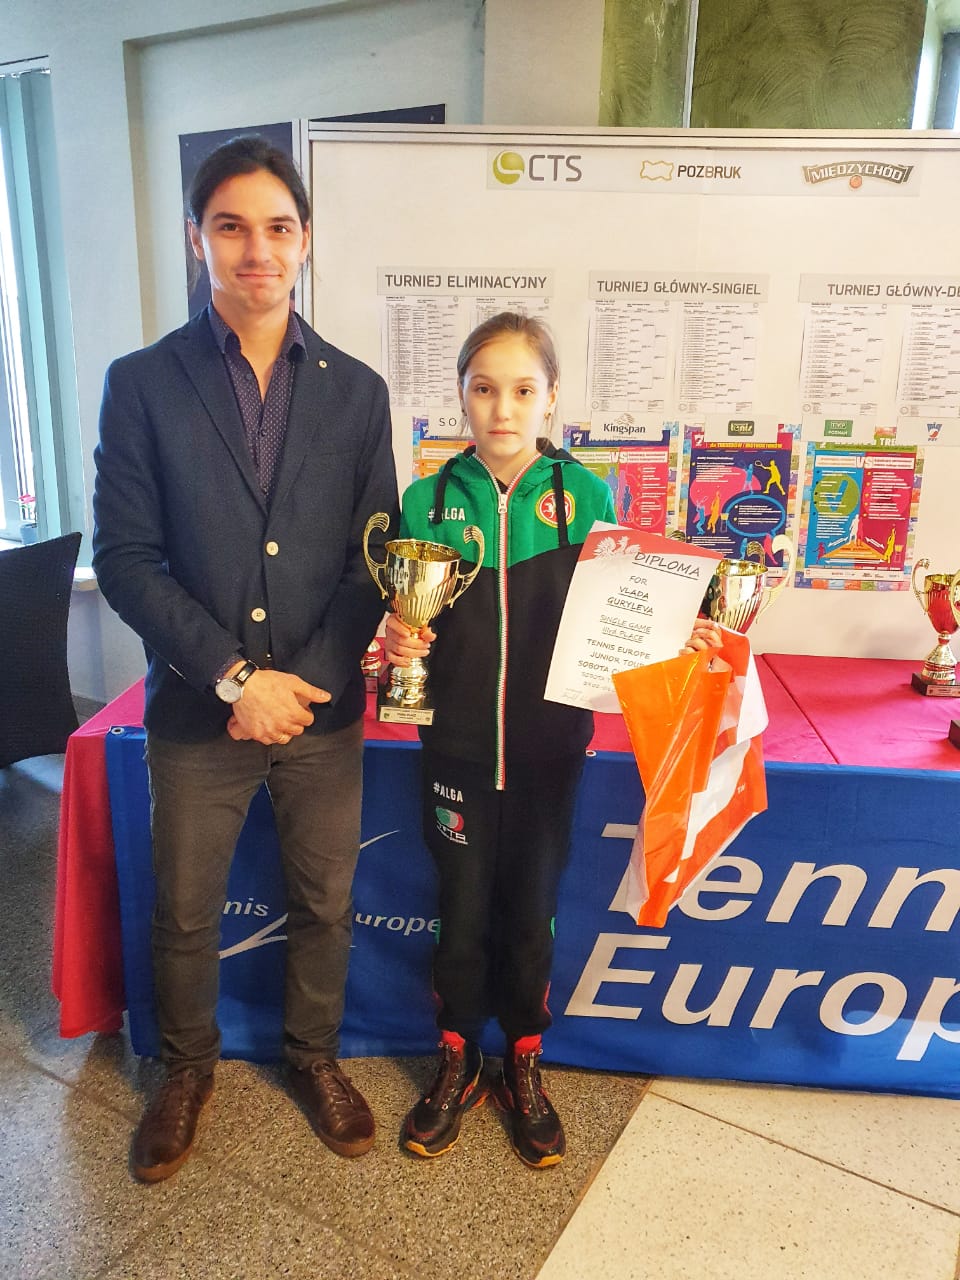 Влада Гурылева - призер международного турнира Tennis Europe